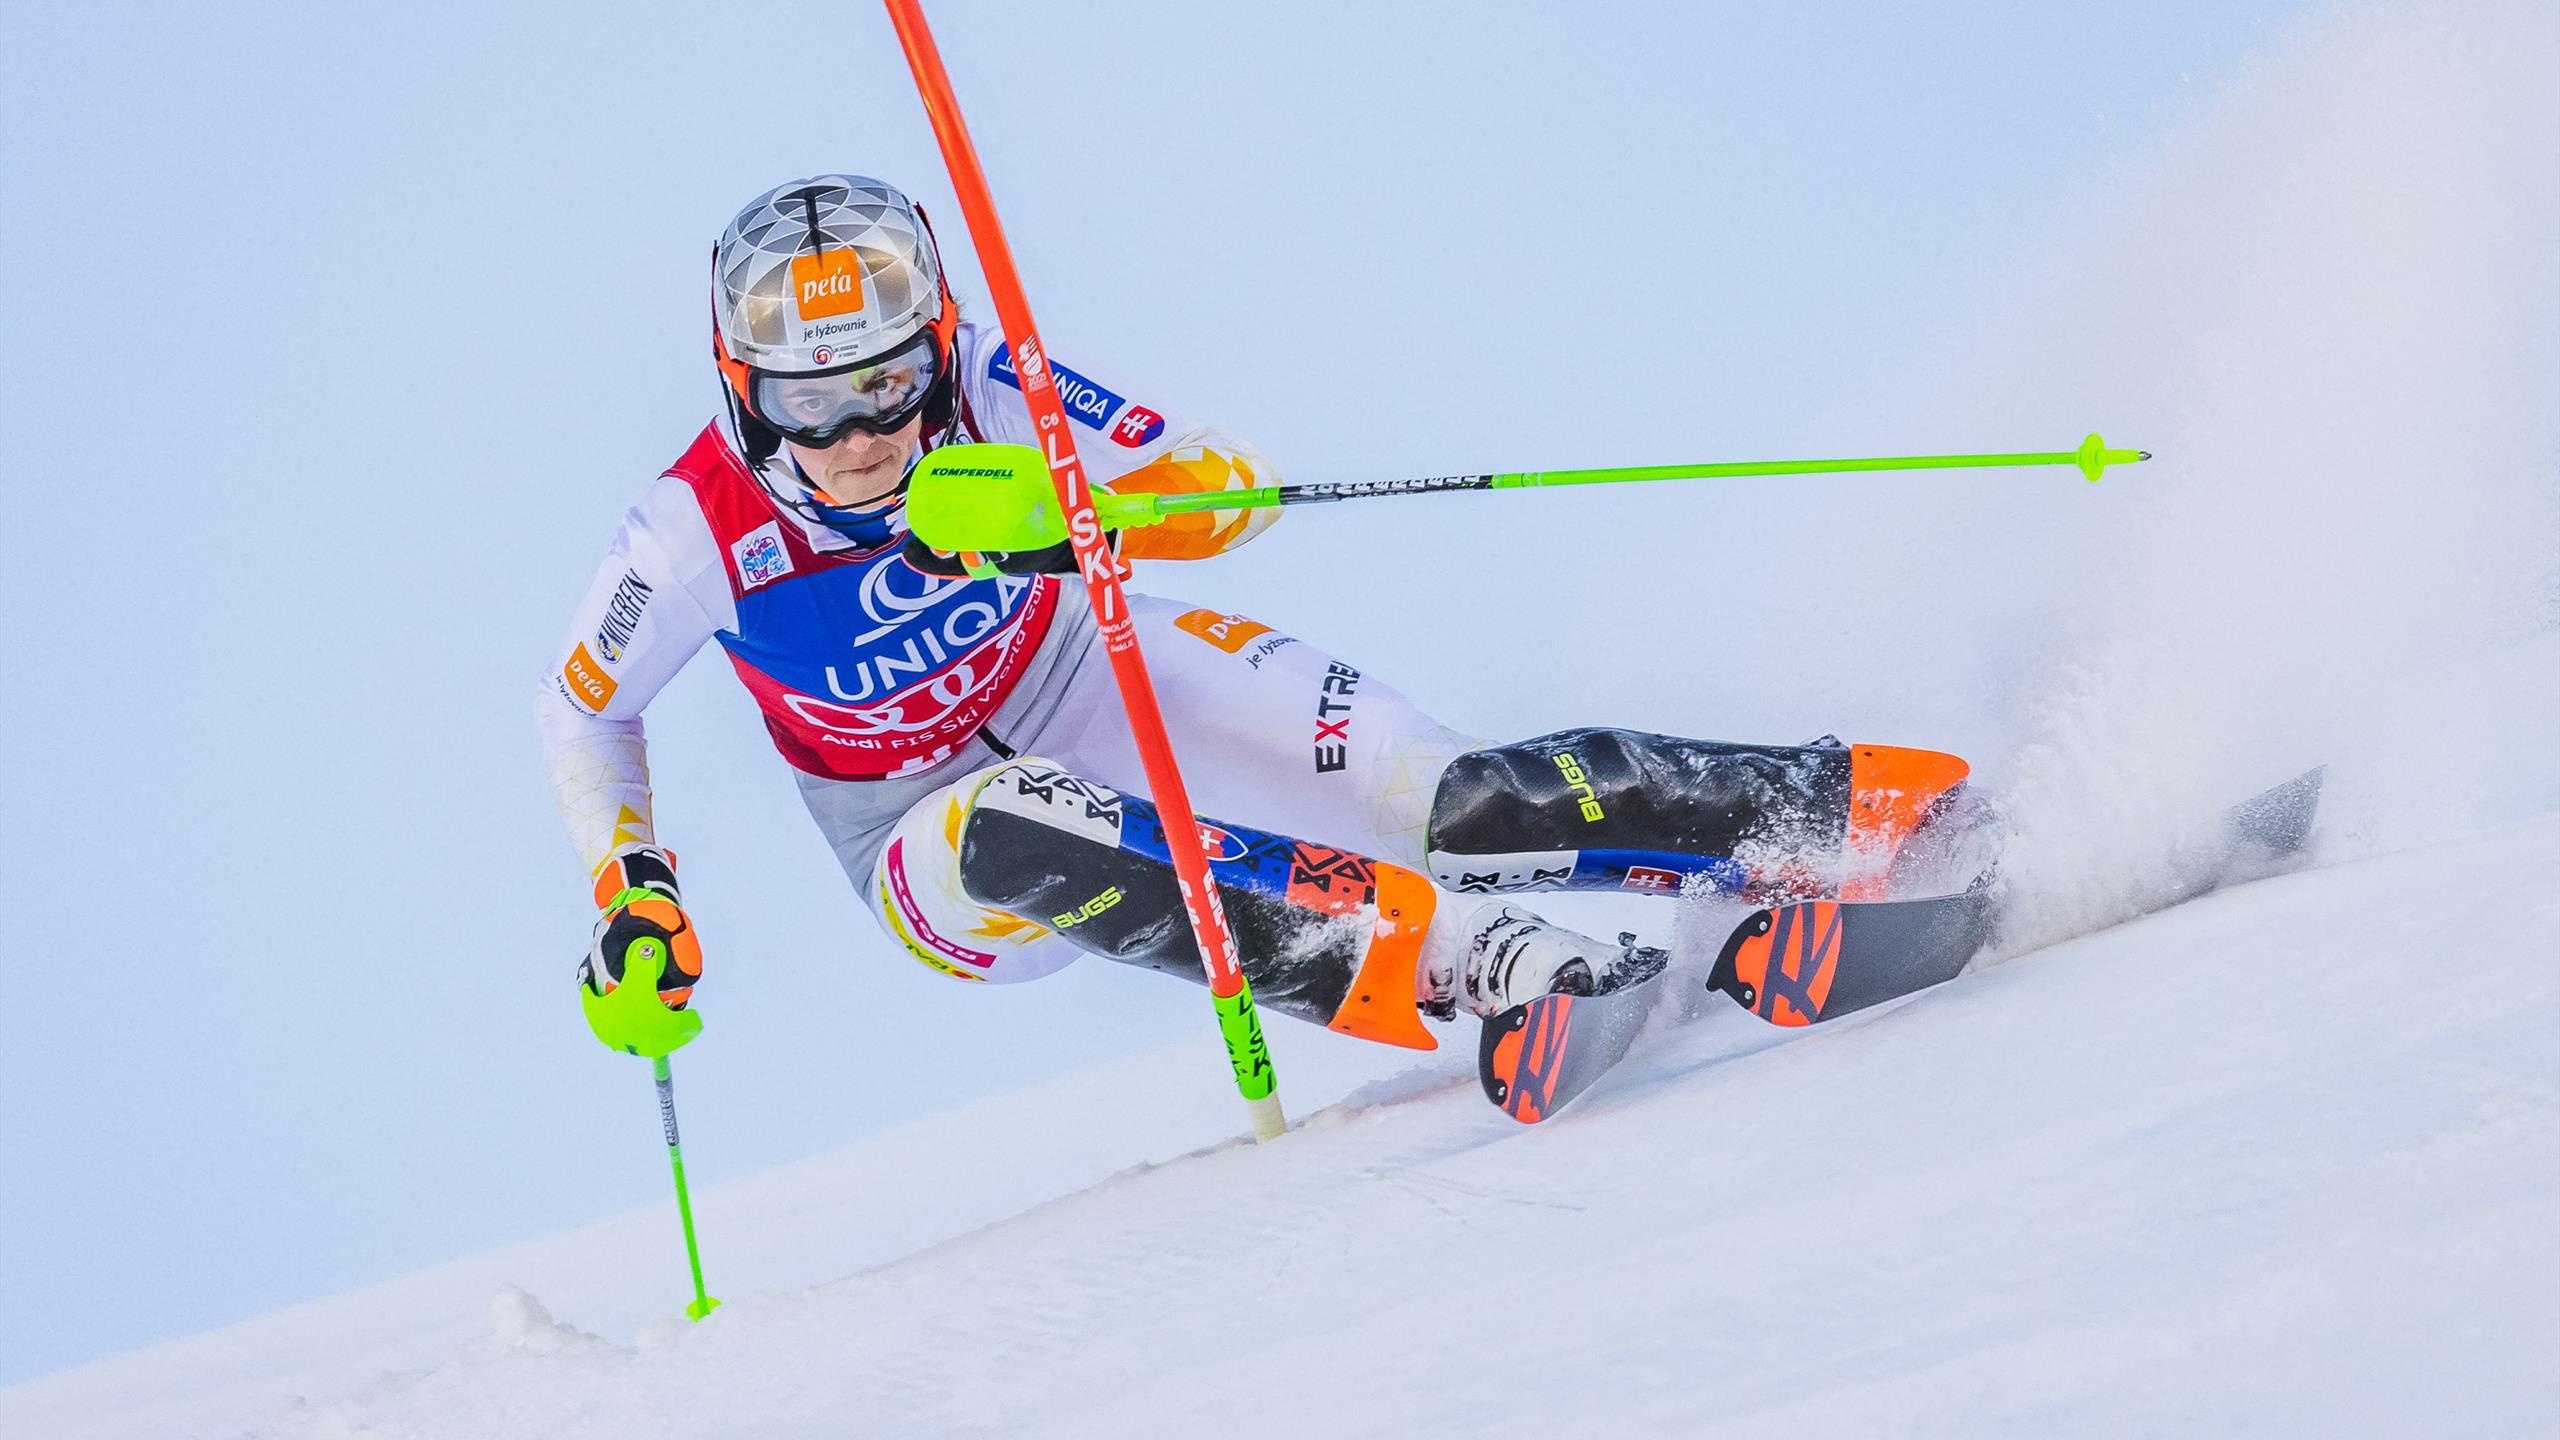 Slalom: Lienz, Petra Vlhova, Passing the distance on a snow track, Winter sports. 2560x1440 HD Wallpaper.